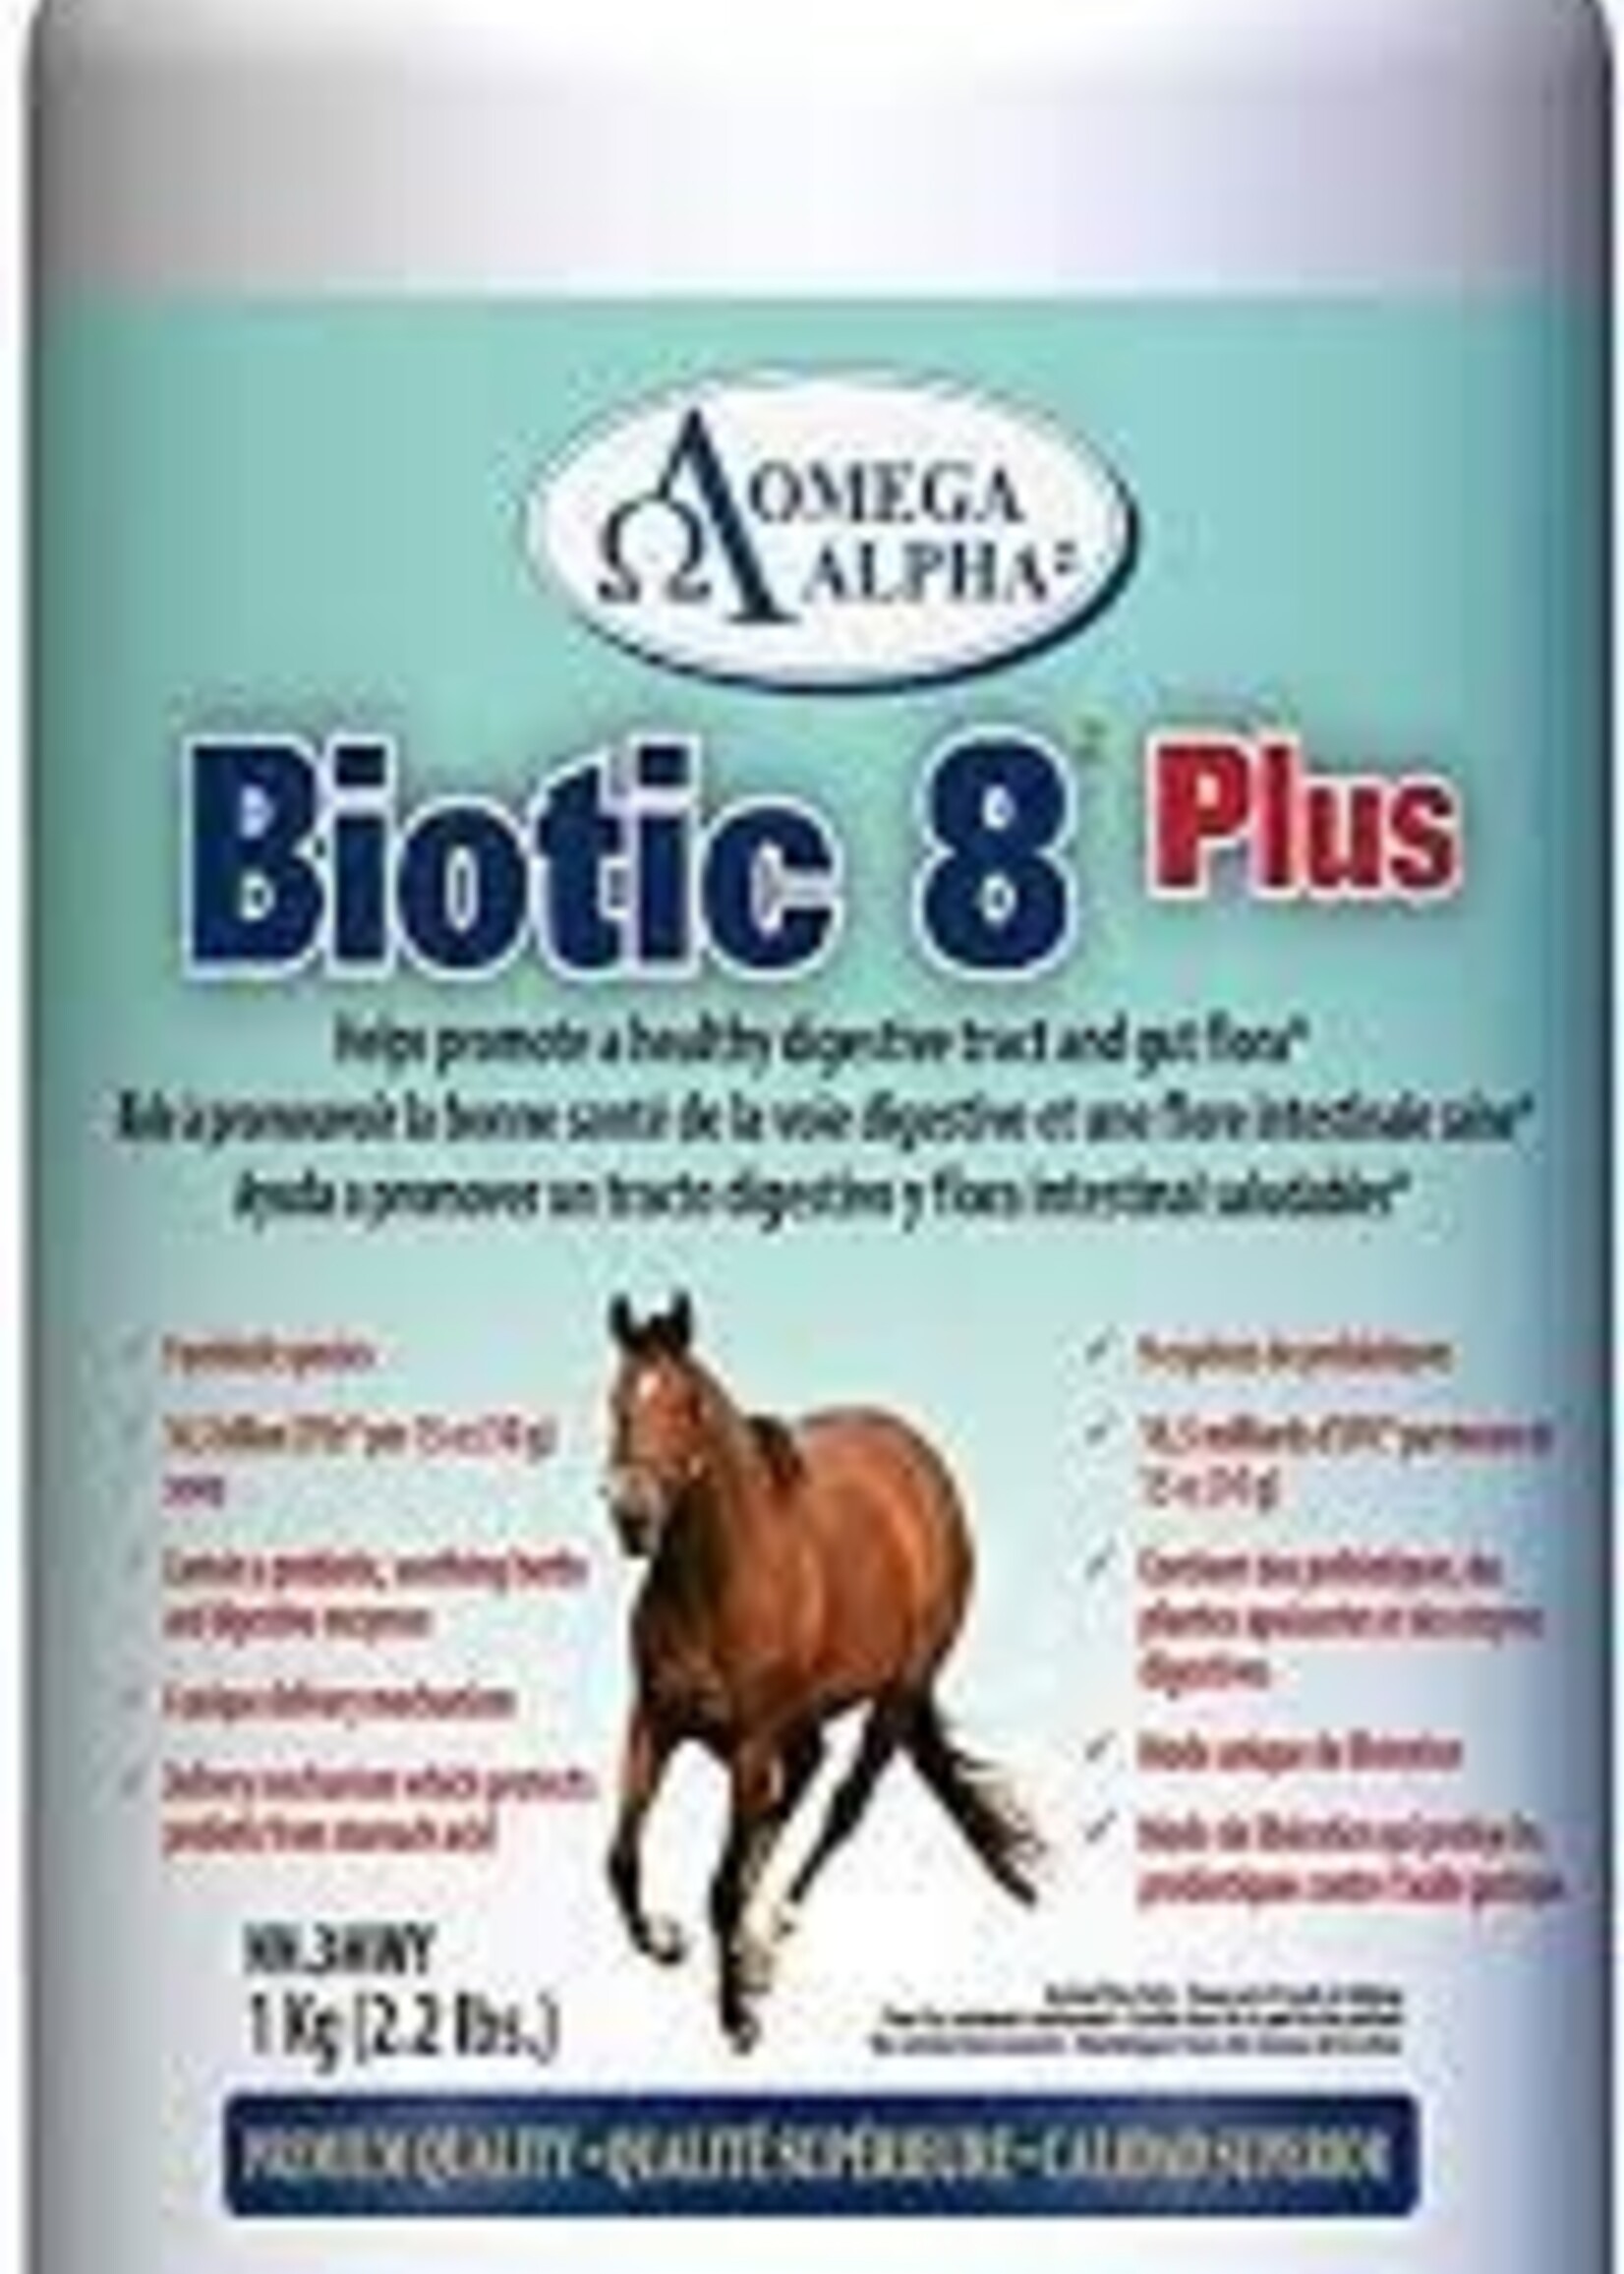 Omega Alpha Biotic 8 Plus, Equine 1kg